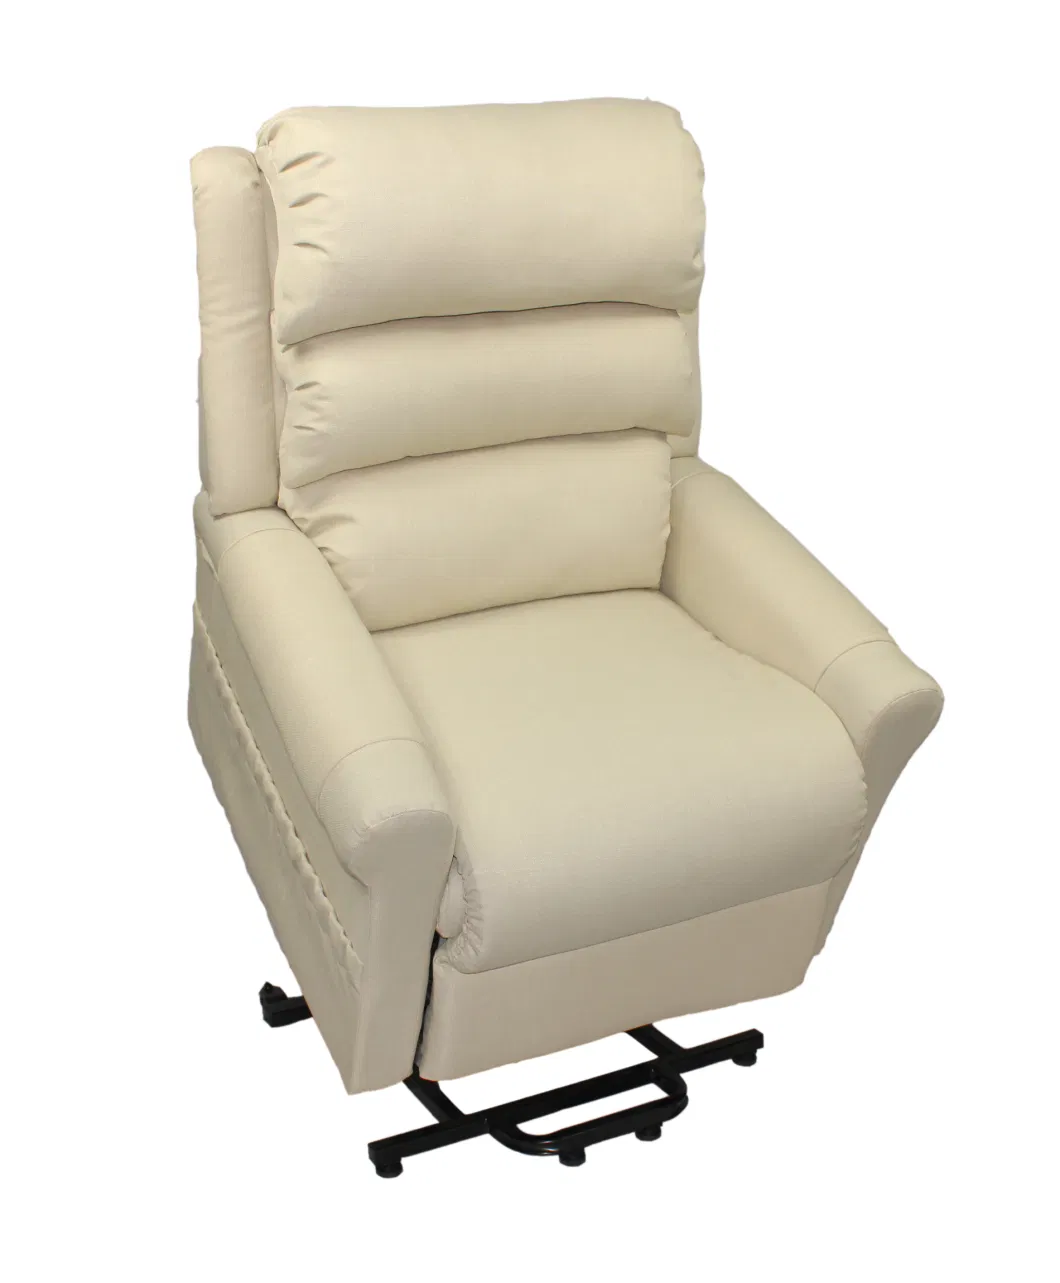 Best Zero Gravity Electric Cheap Price Back Shiatsu Kneading Full Body 4D Recliner SPA Gaming Office Luxury Massage Chair